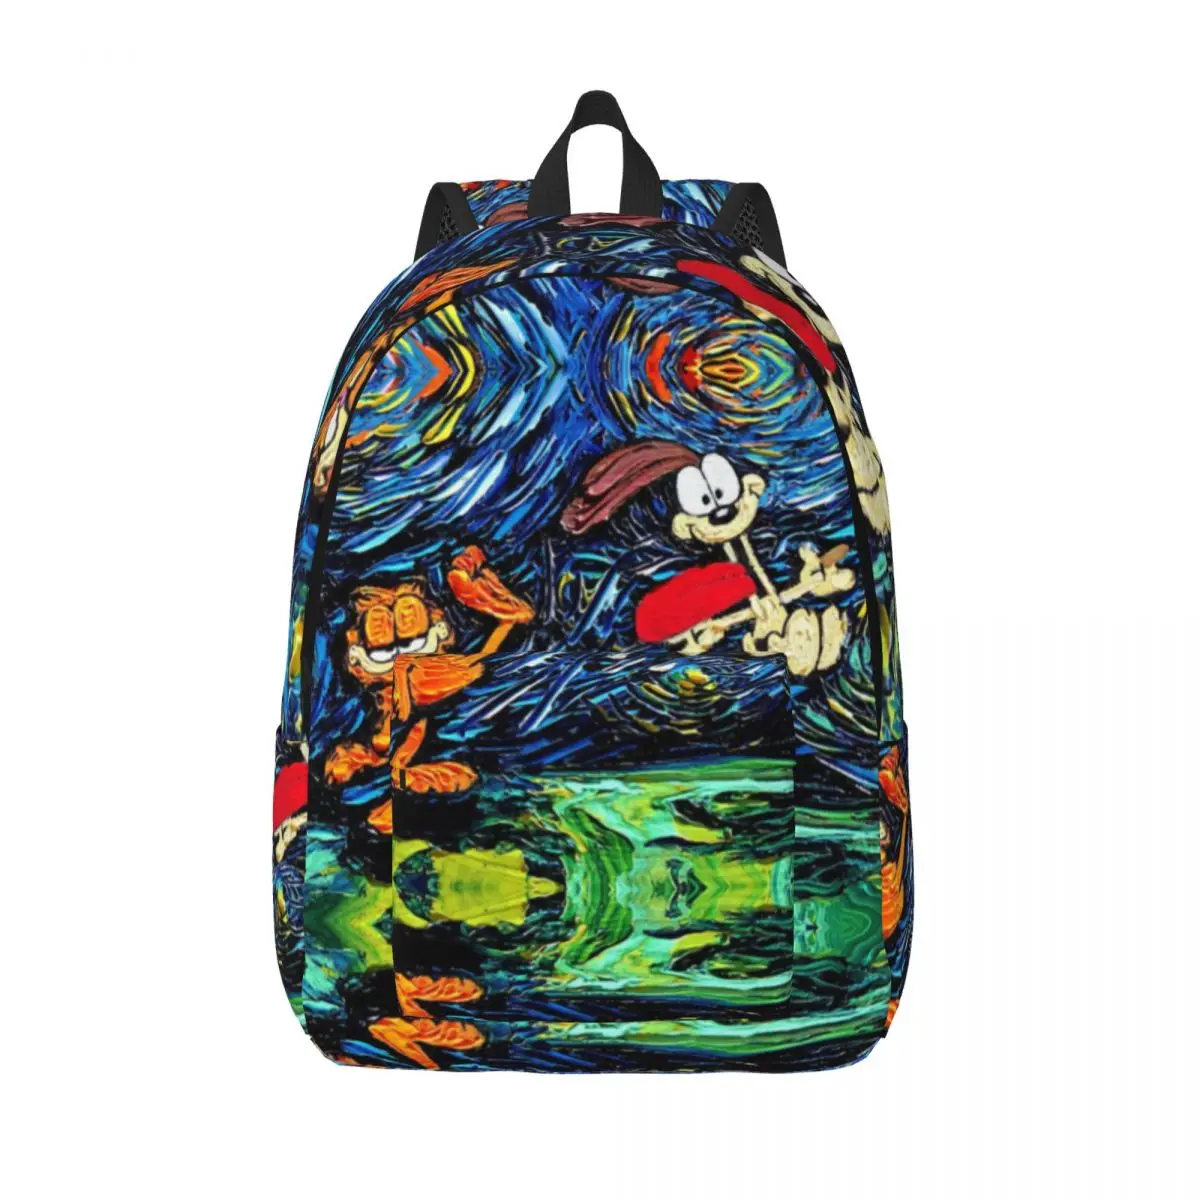 Garfields Cat Kick Canvas Backpacks for Men Women College School Student Bookbag Fits 15 Inch Laptop